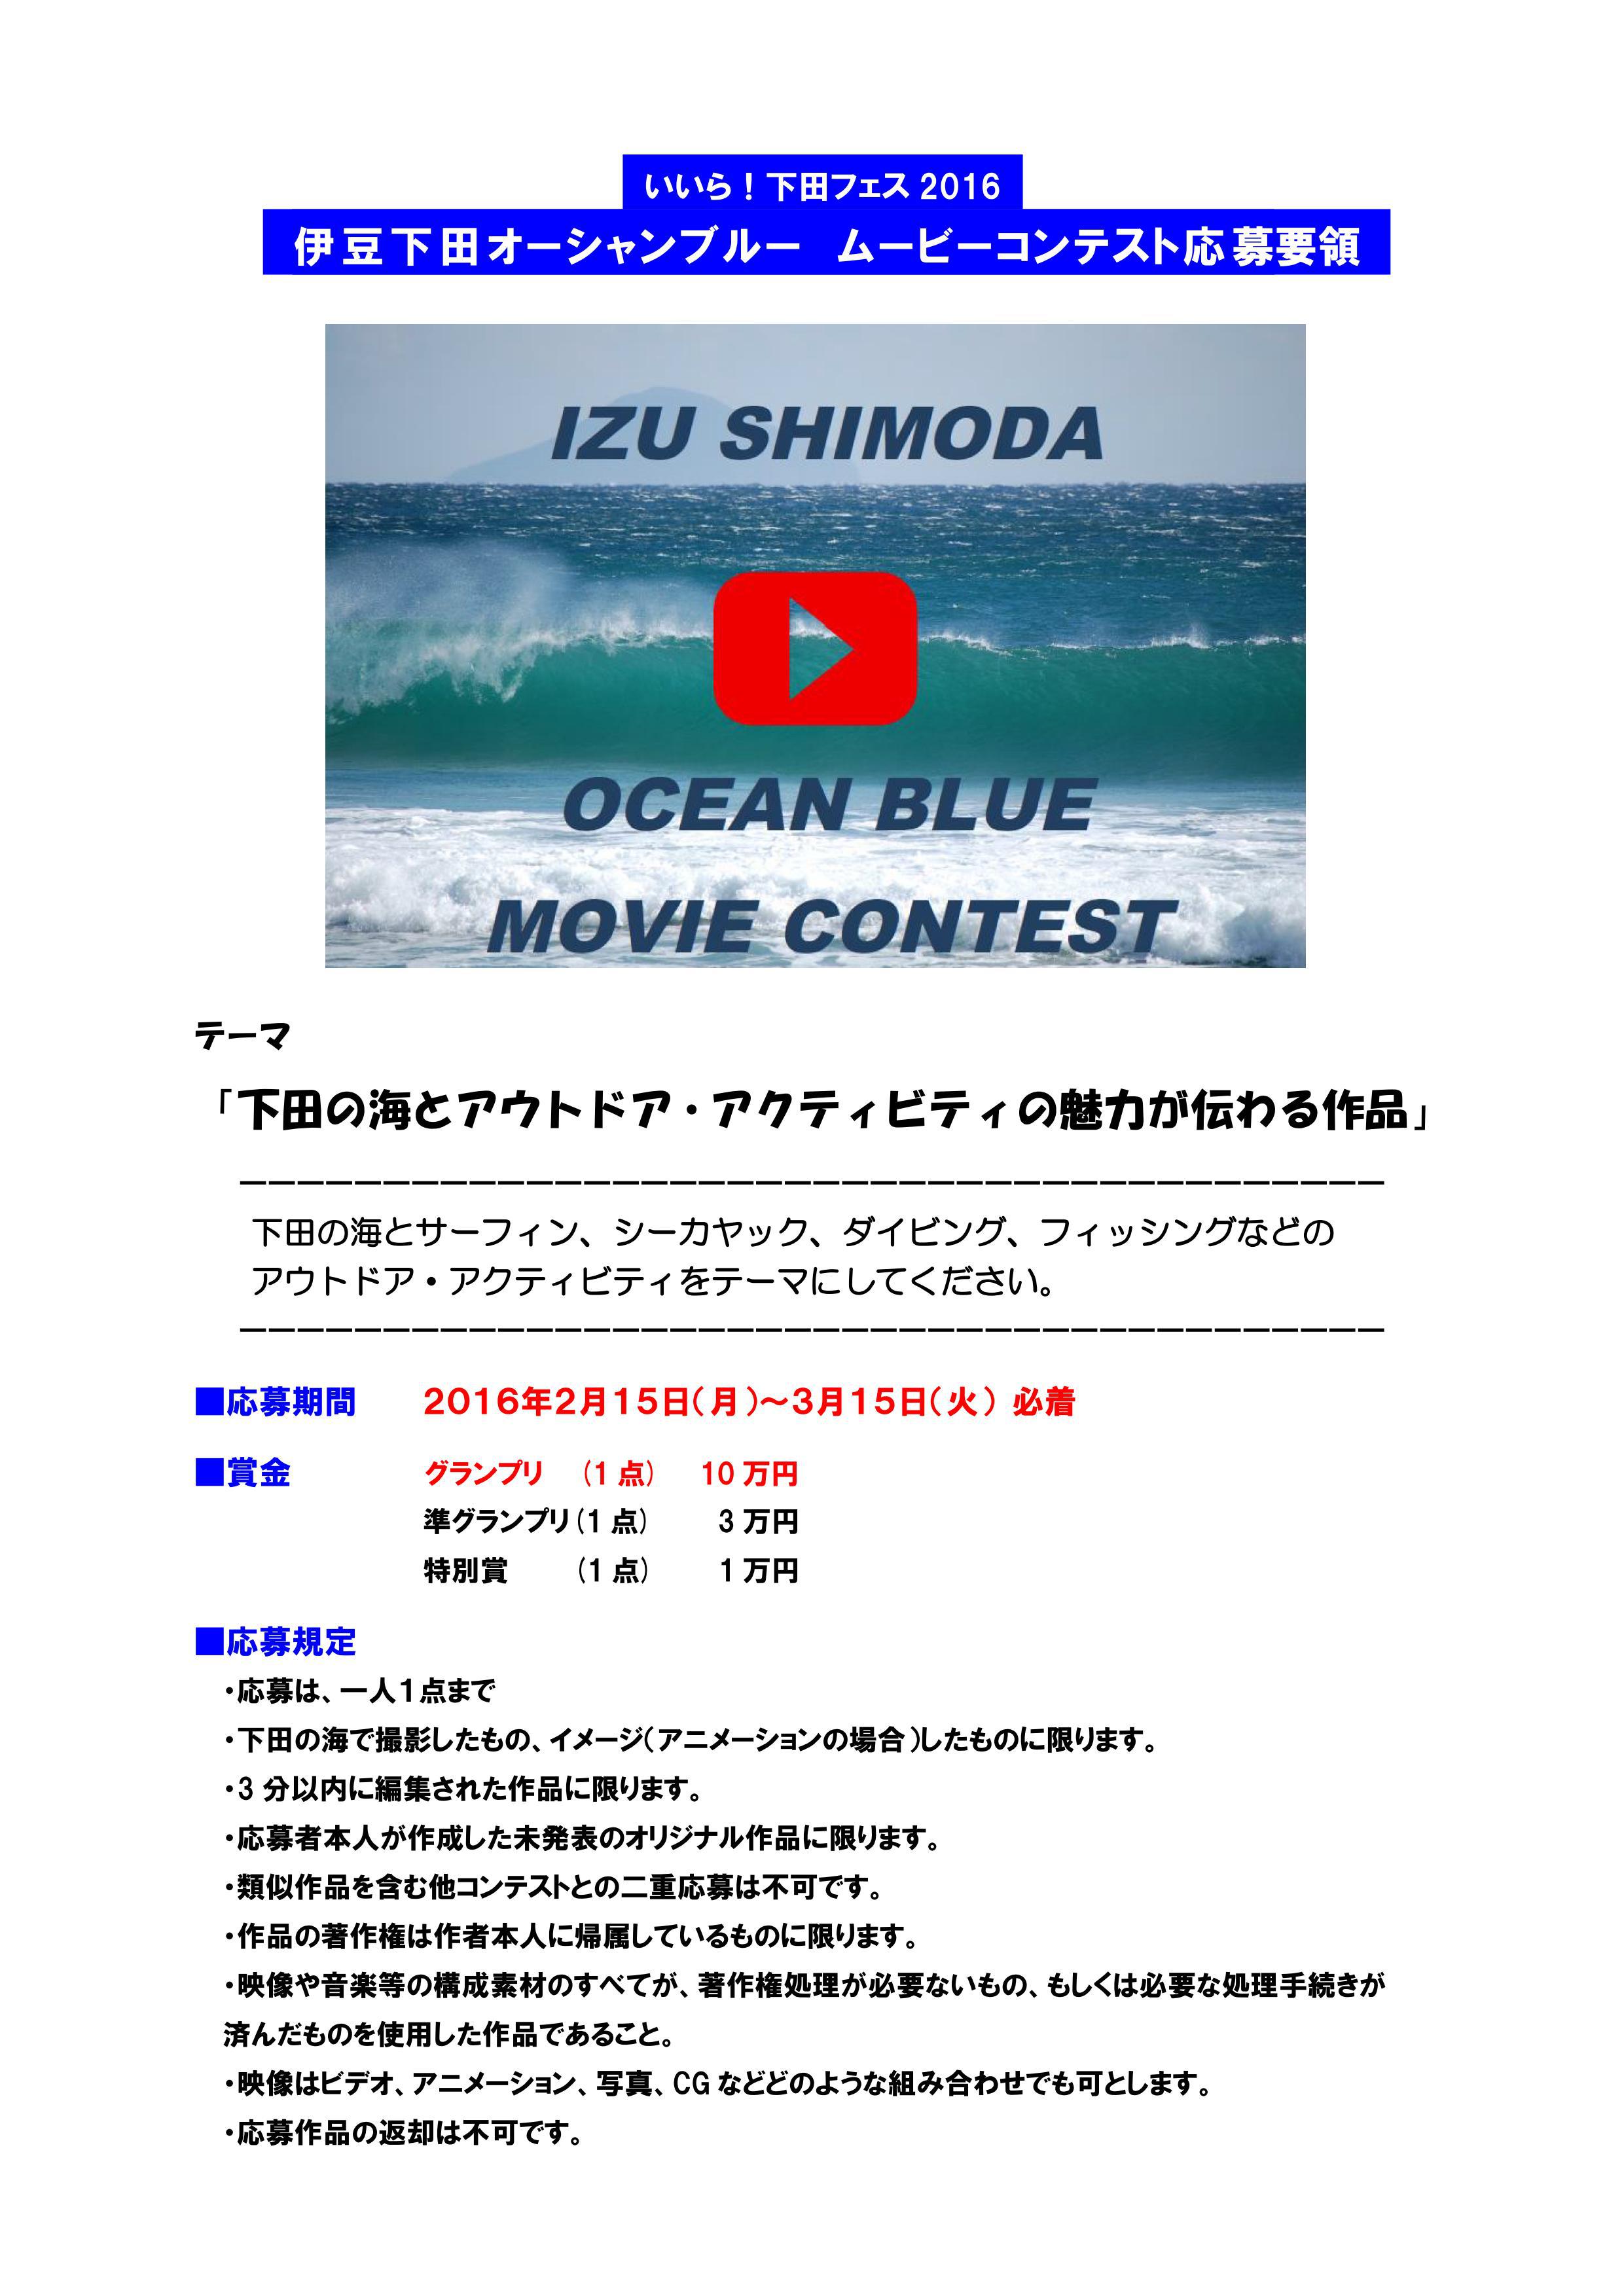 →IZU SHIMODA・ OCEAN BLUE MOVIE CONTEST開催！応募〆切3/15(火)迄